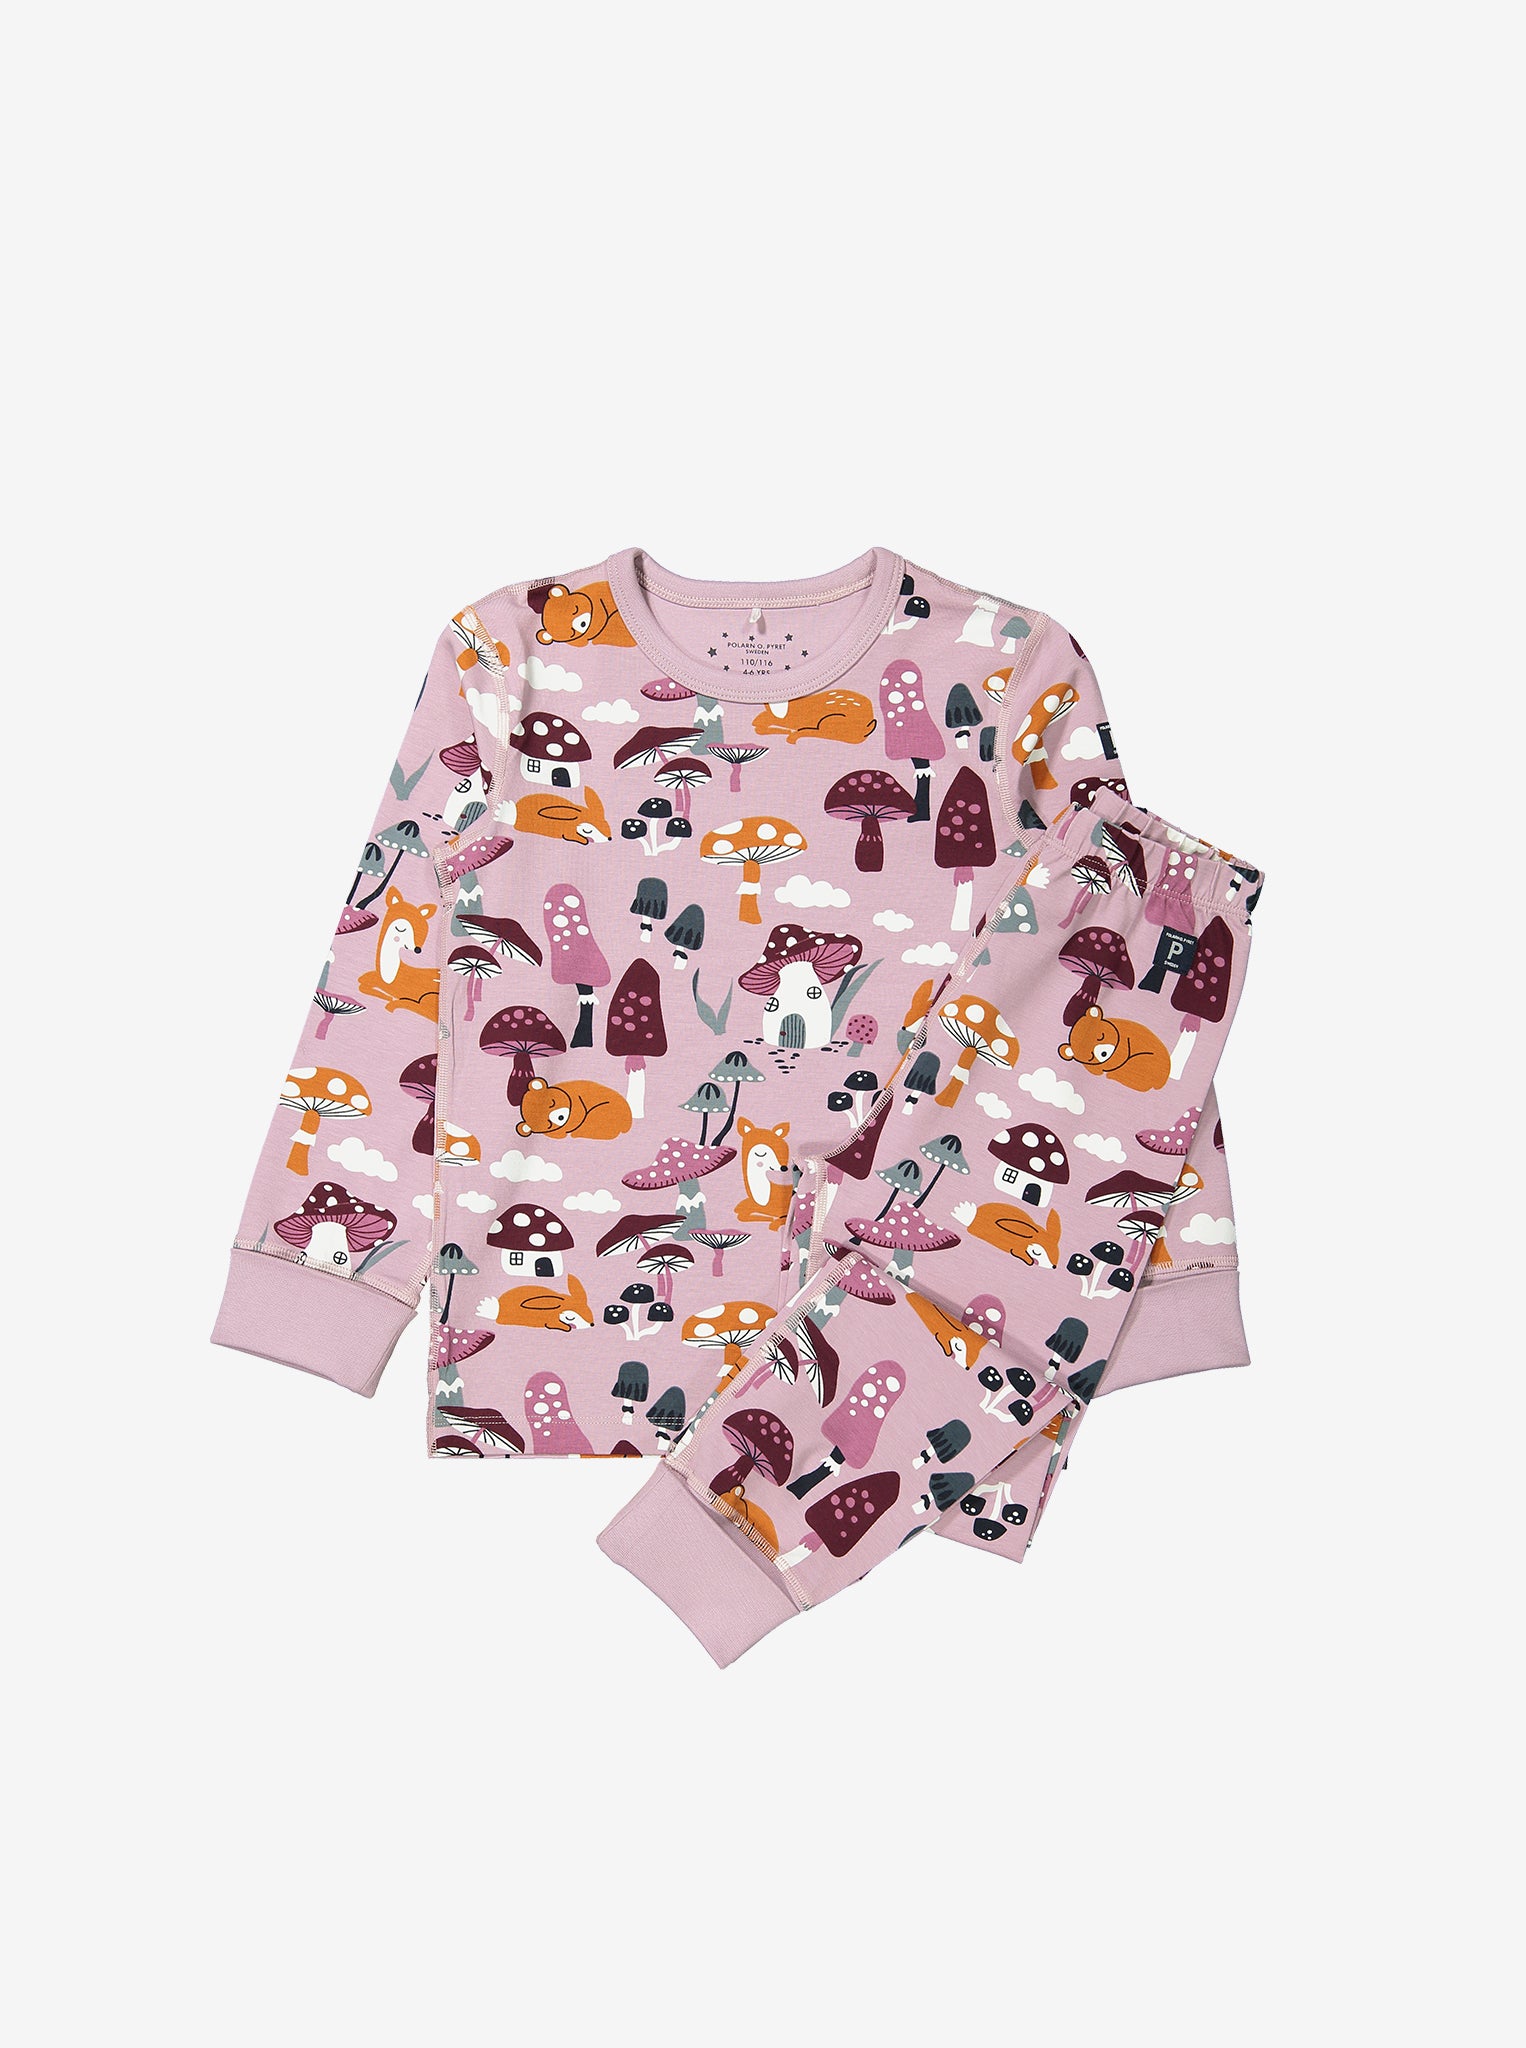 Pink woodland animal printed kids cotton pyjamas with foldable sleeve, leg cuffs & elasticated waist. Made from organic cotton.